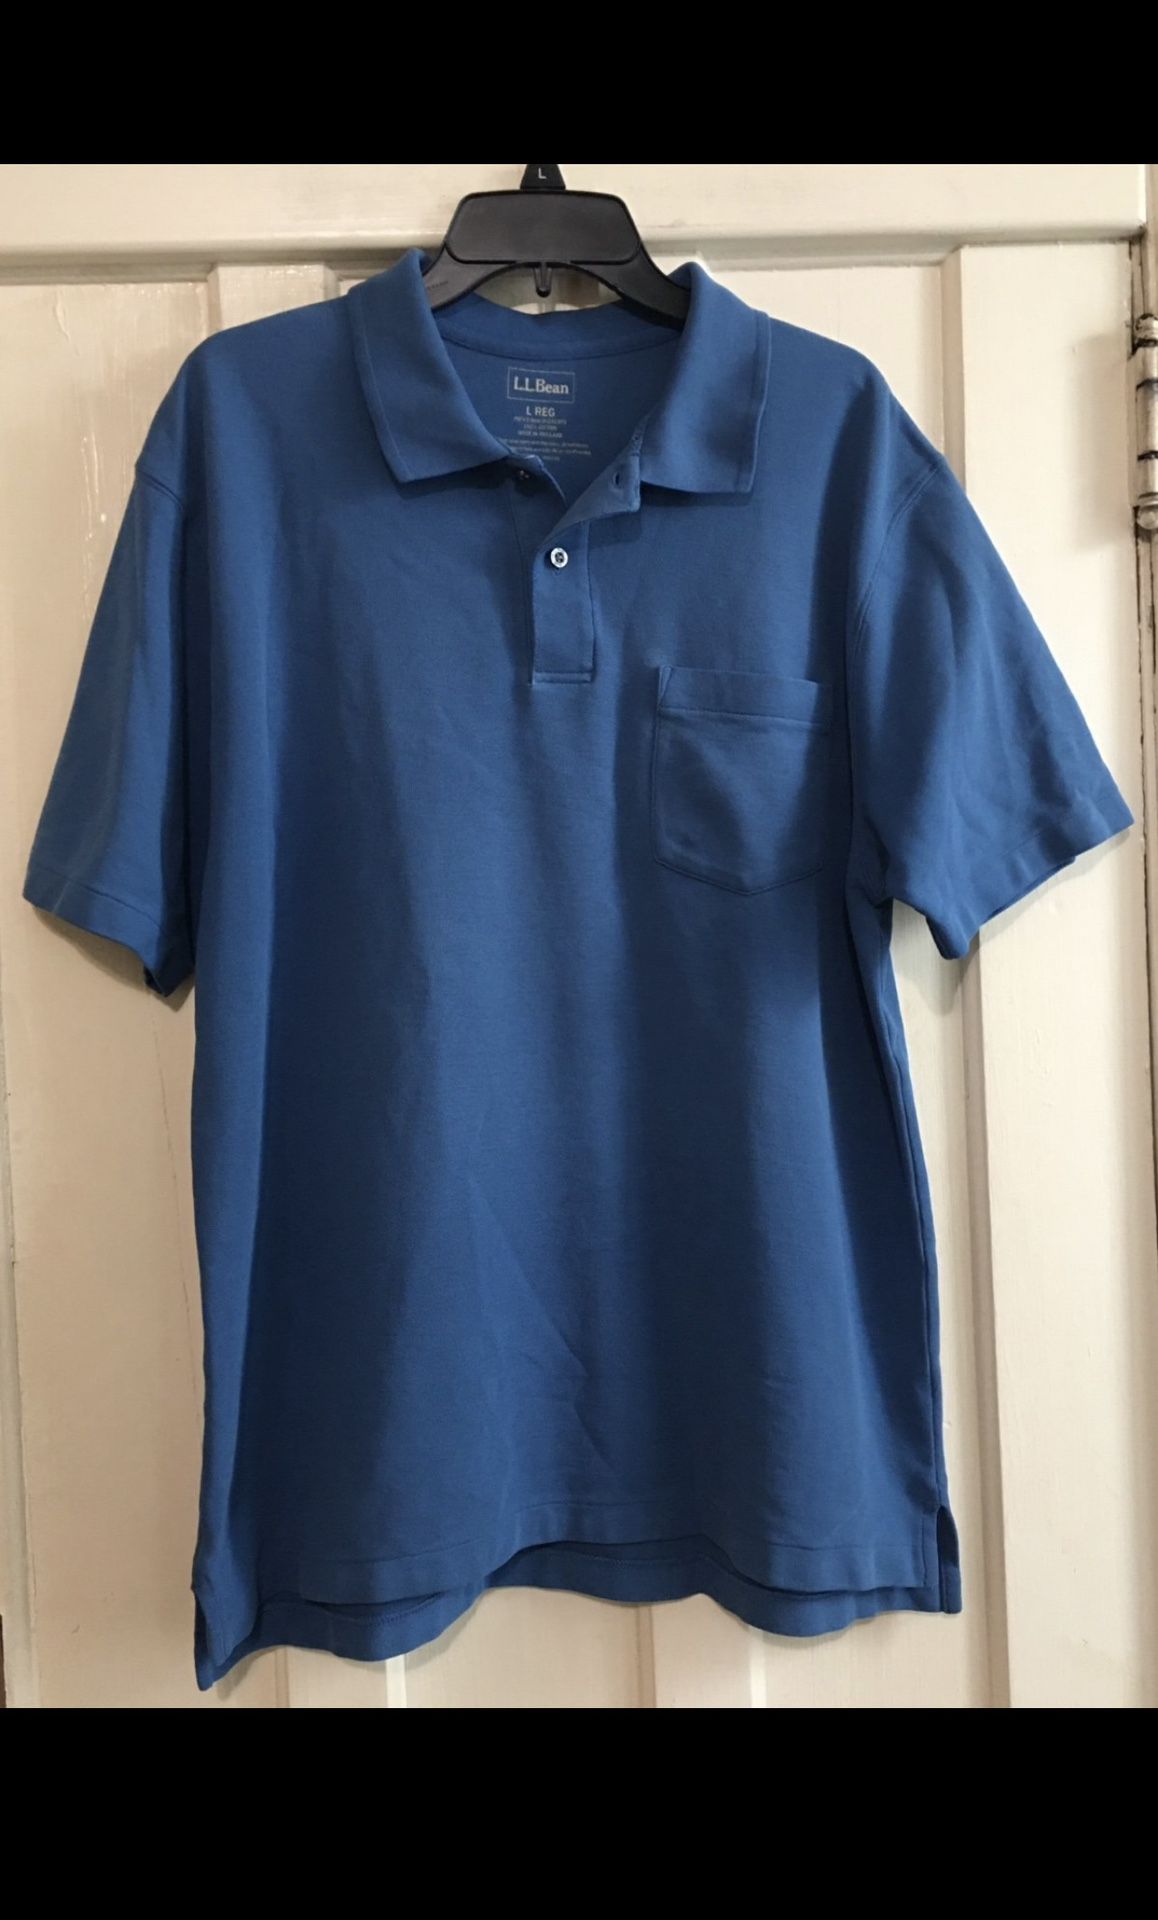 L.L.Bean men’s polo shirt Large